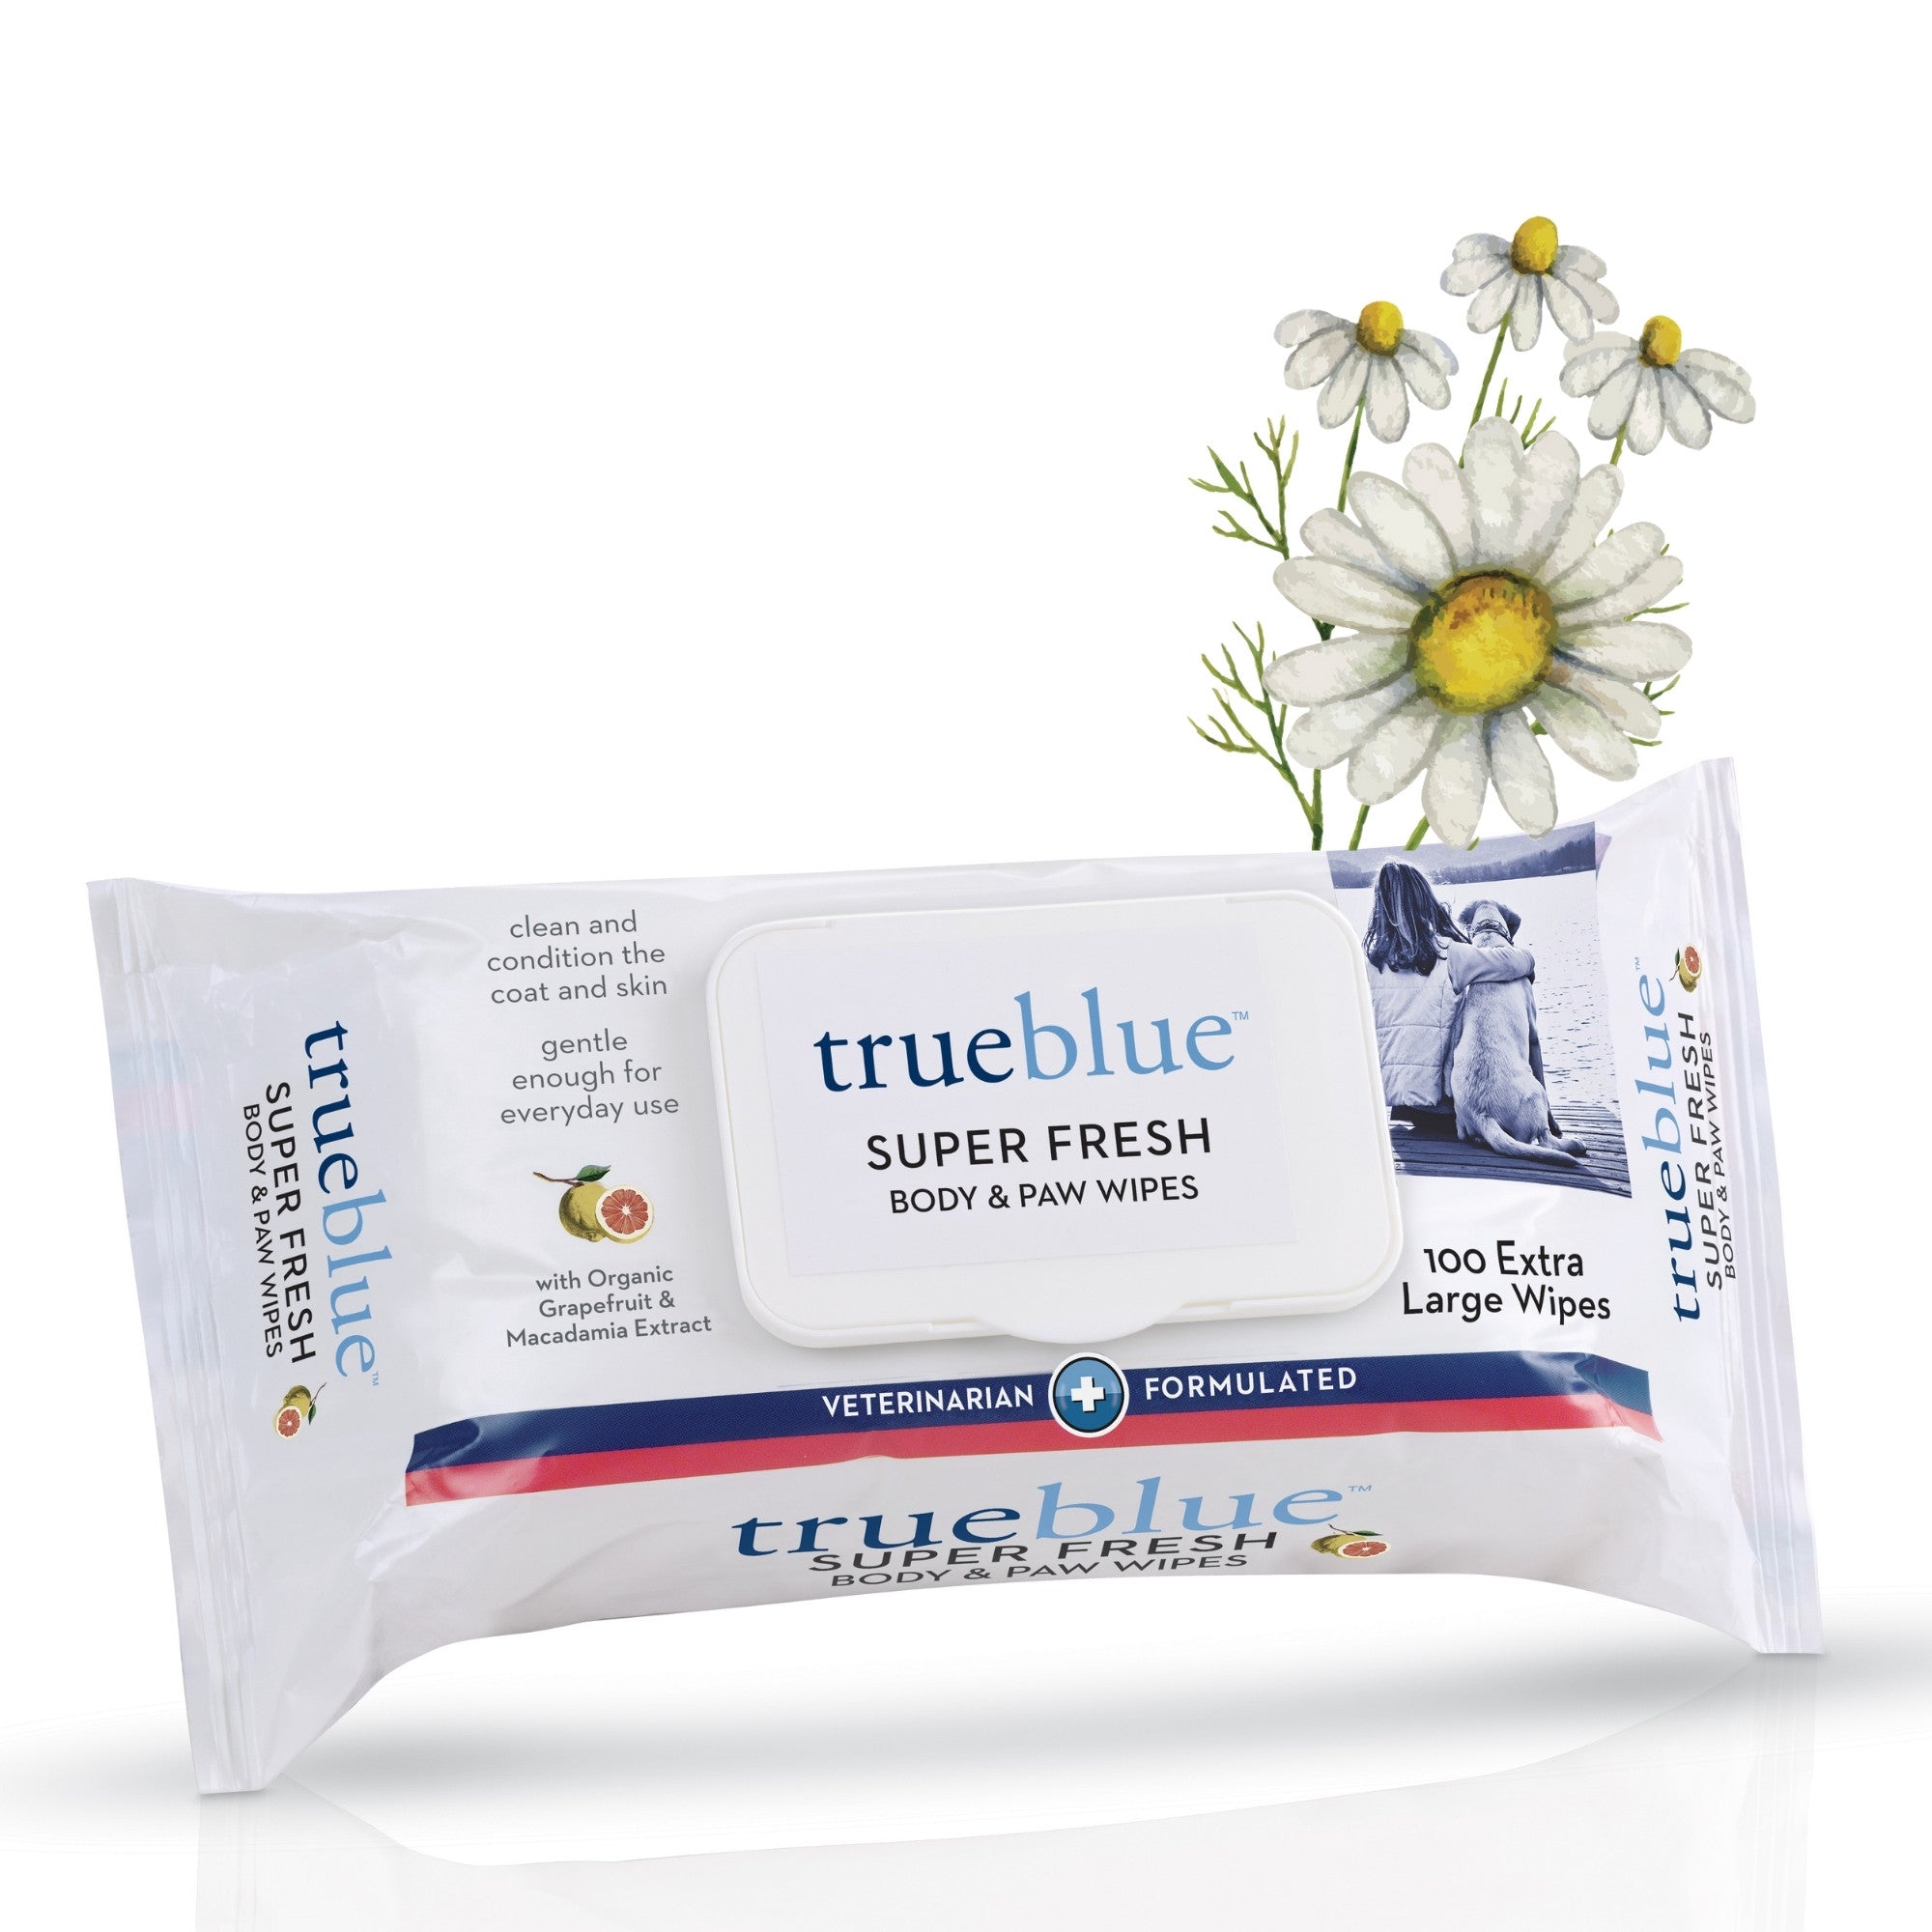 TrueBlue Super Fresh Body & Paw Wipes